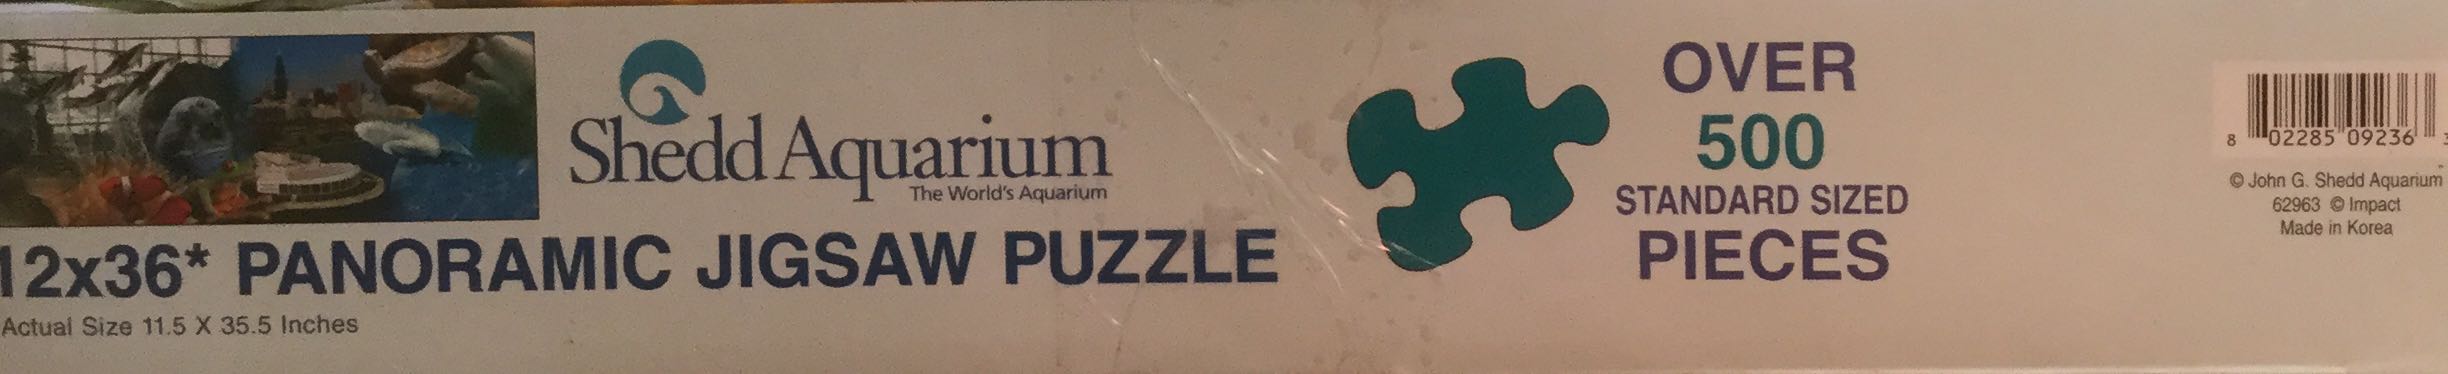 Chicago. —  Shedd Aquarium — The World’s Aquarium  puzzle collectible [Barcode 802285092363] - Main Image 2